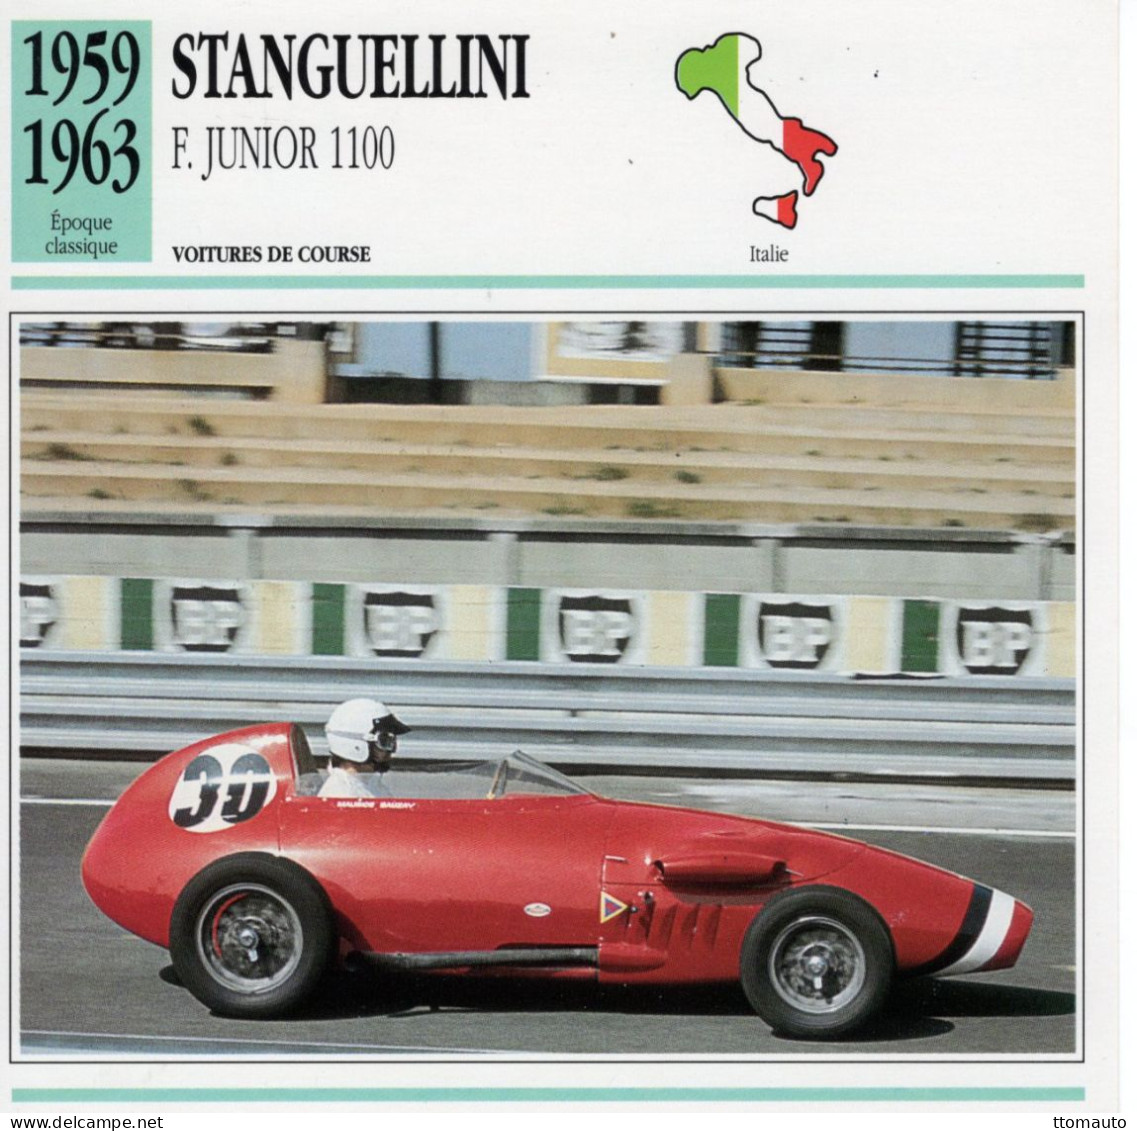 Stanguellini Formula Junior 1100 -  1960  - Voiture De Course -  Fiche Technique Automobile (I) - Coches